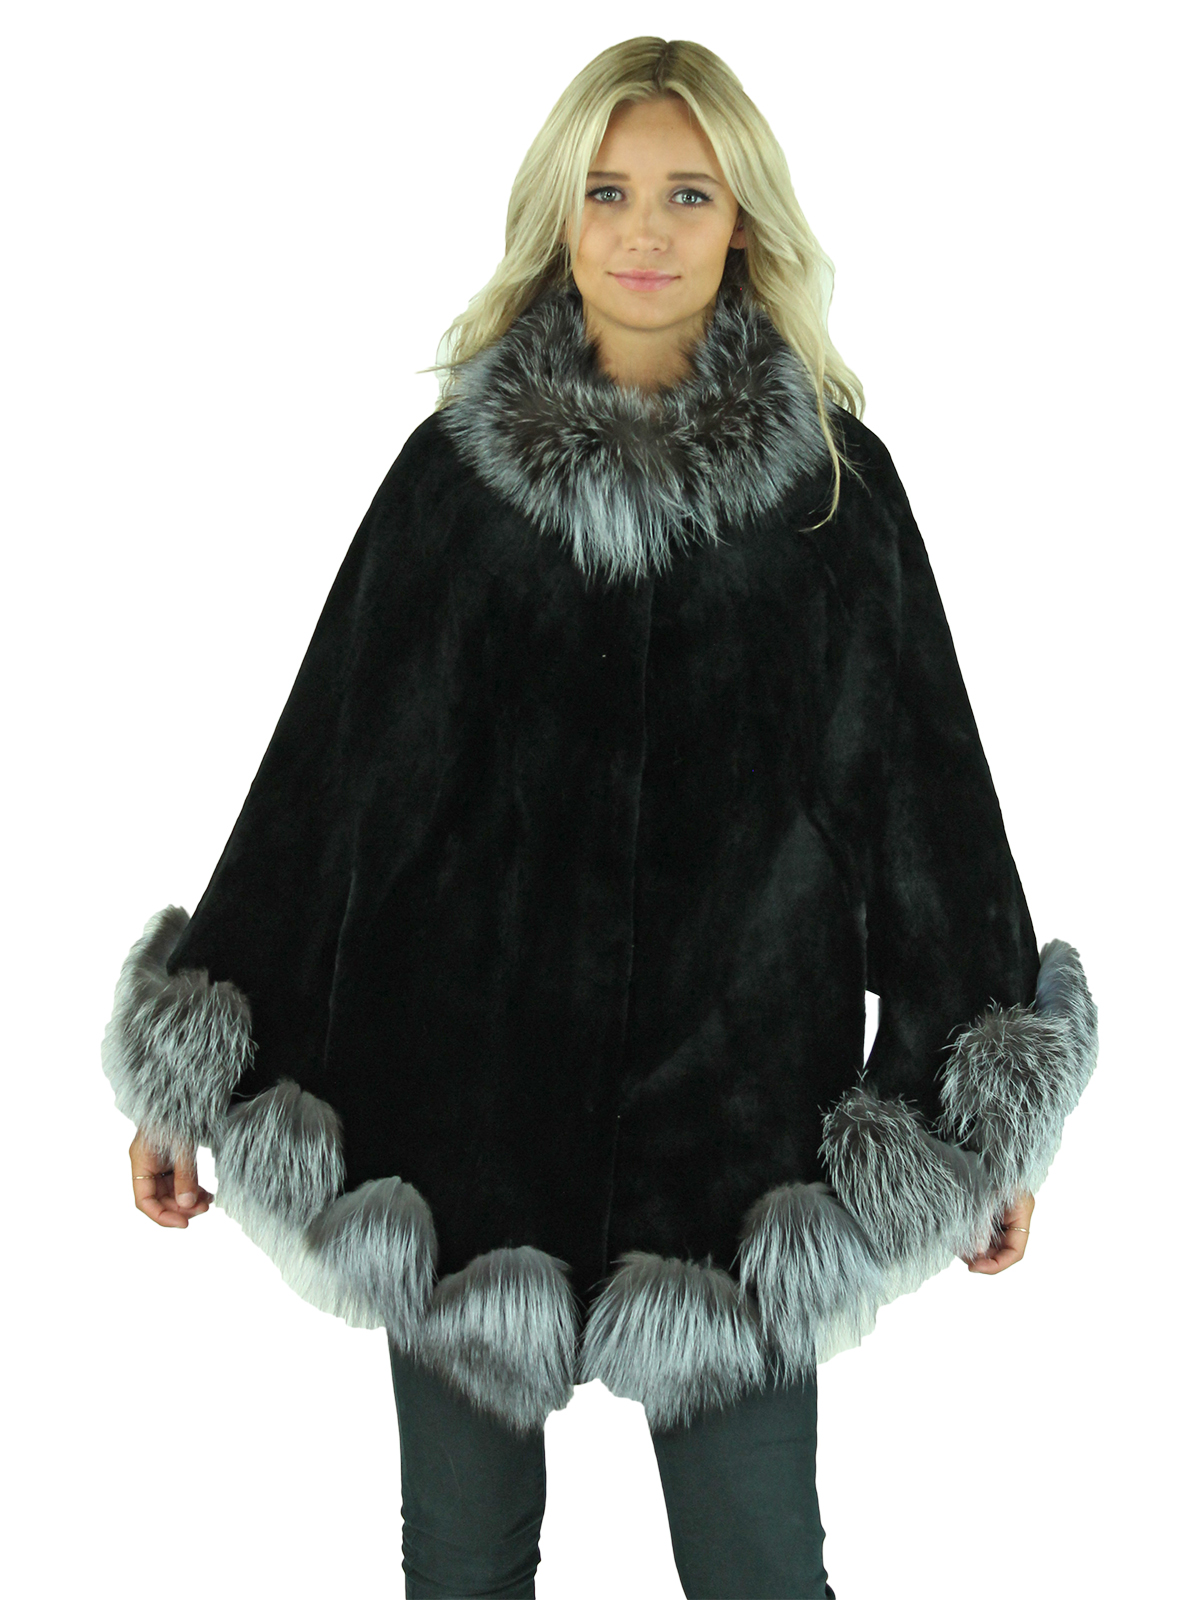 discount 53% NoName Cape and poncho WOMEN FASHION Coats Cape and poncho Fur Black S 